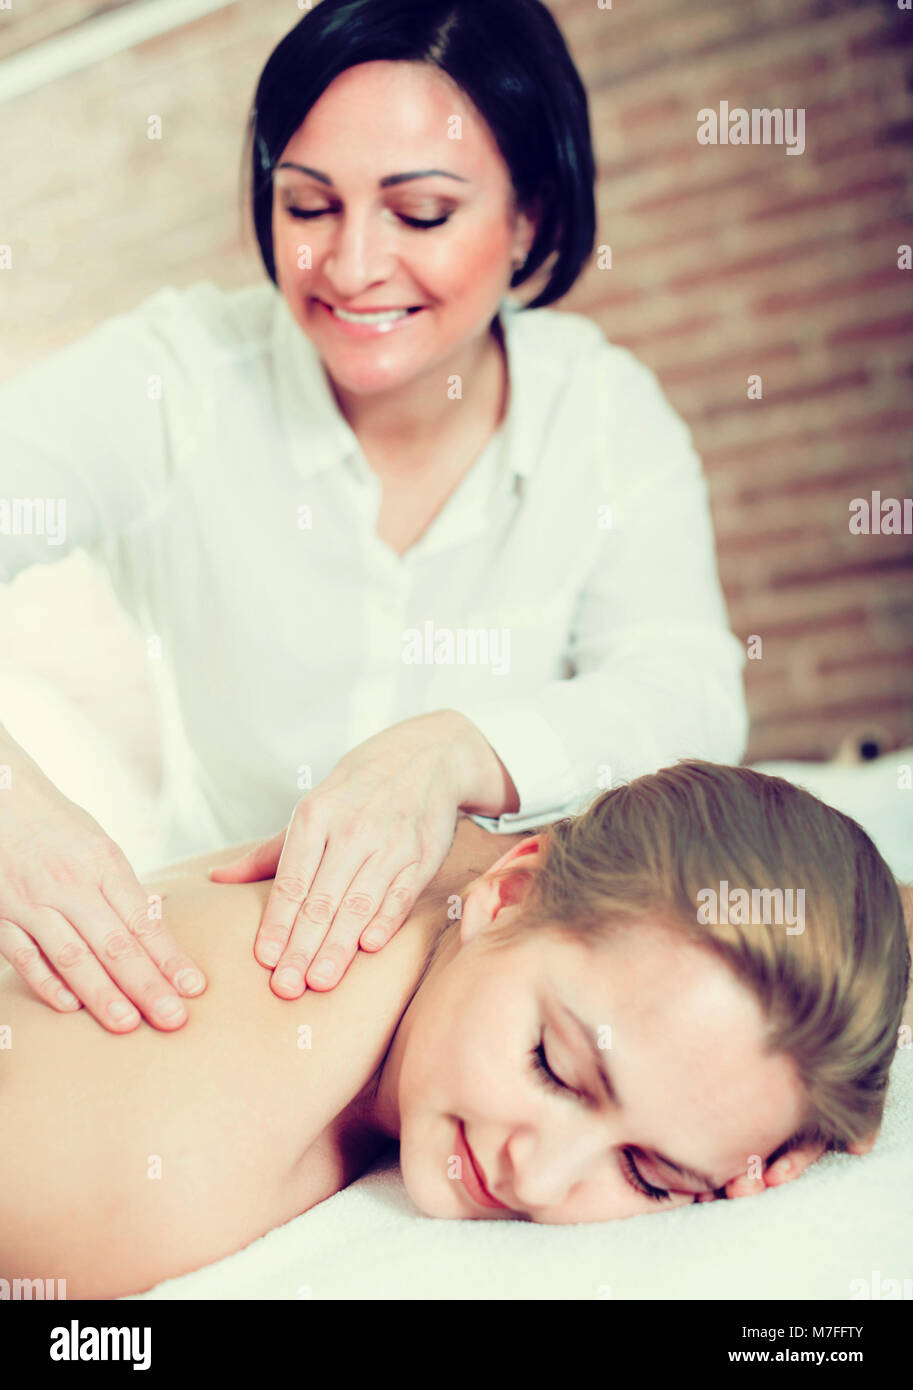 https://c8.alamy.com/comp/M7FFTY/mature-female-massagist-is-doing-relaxing-massage-shoulder-area-for-M7FFTY.jpg